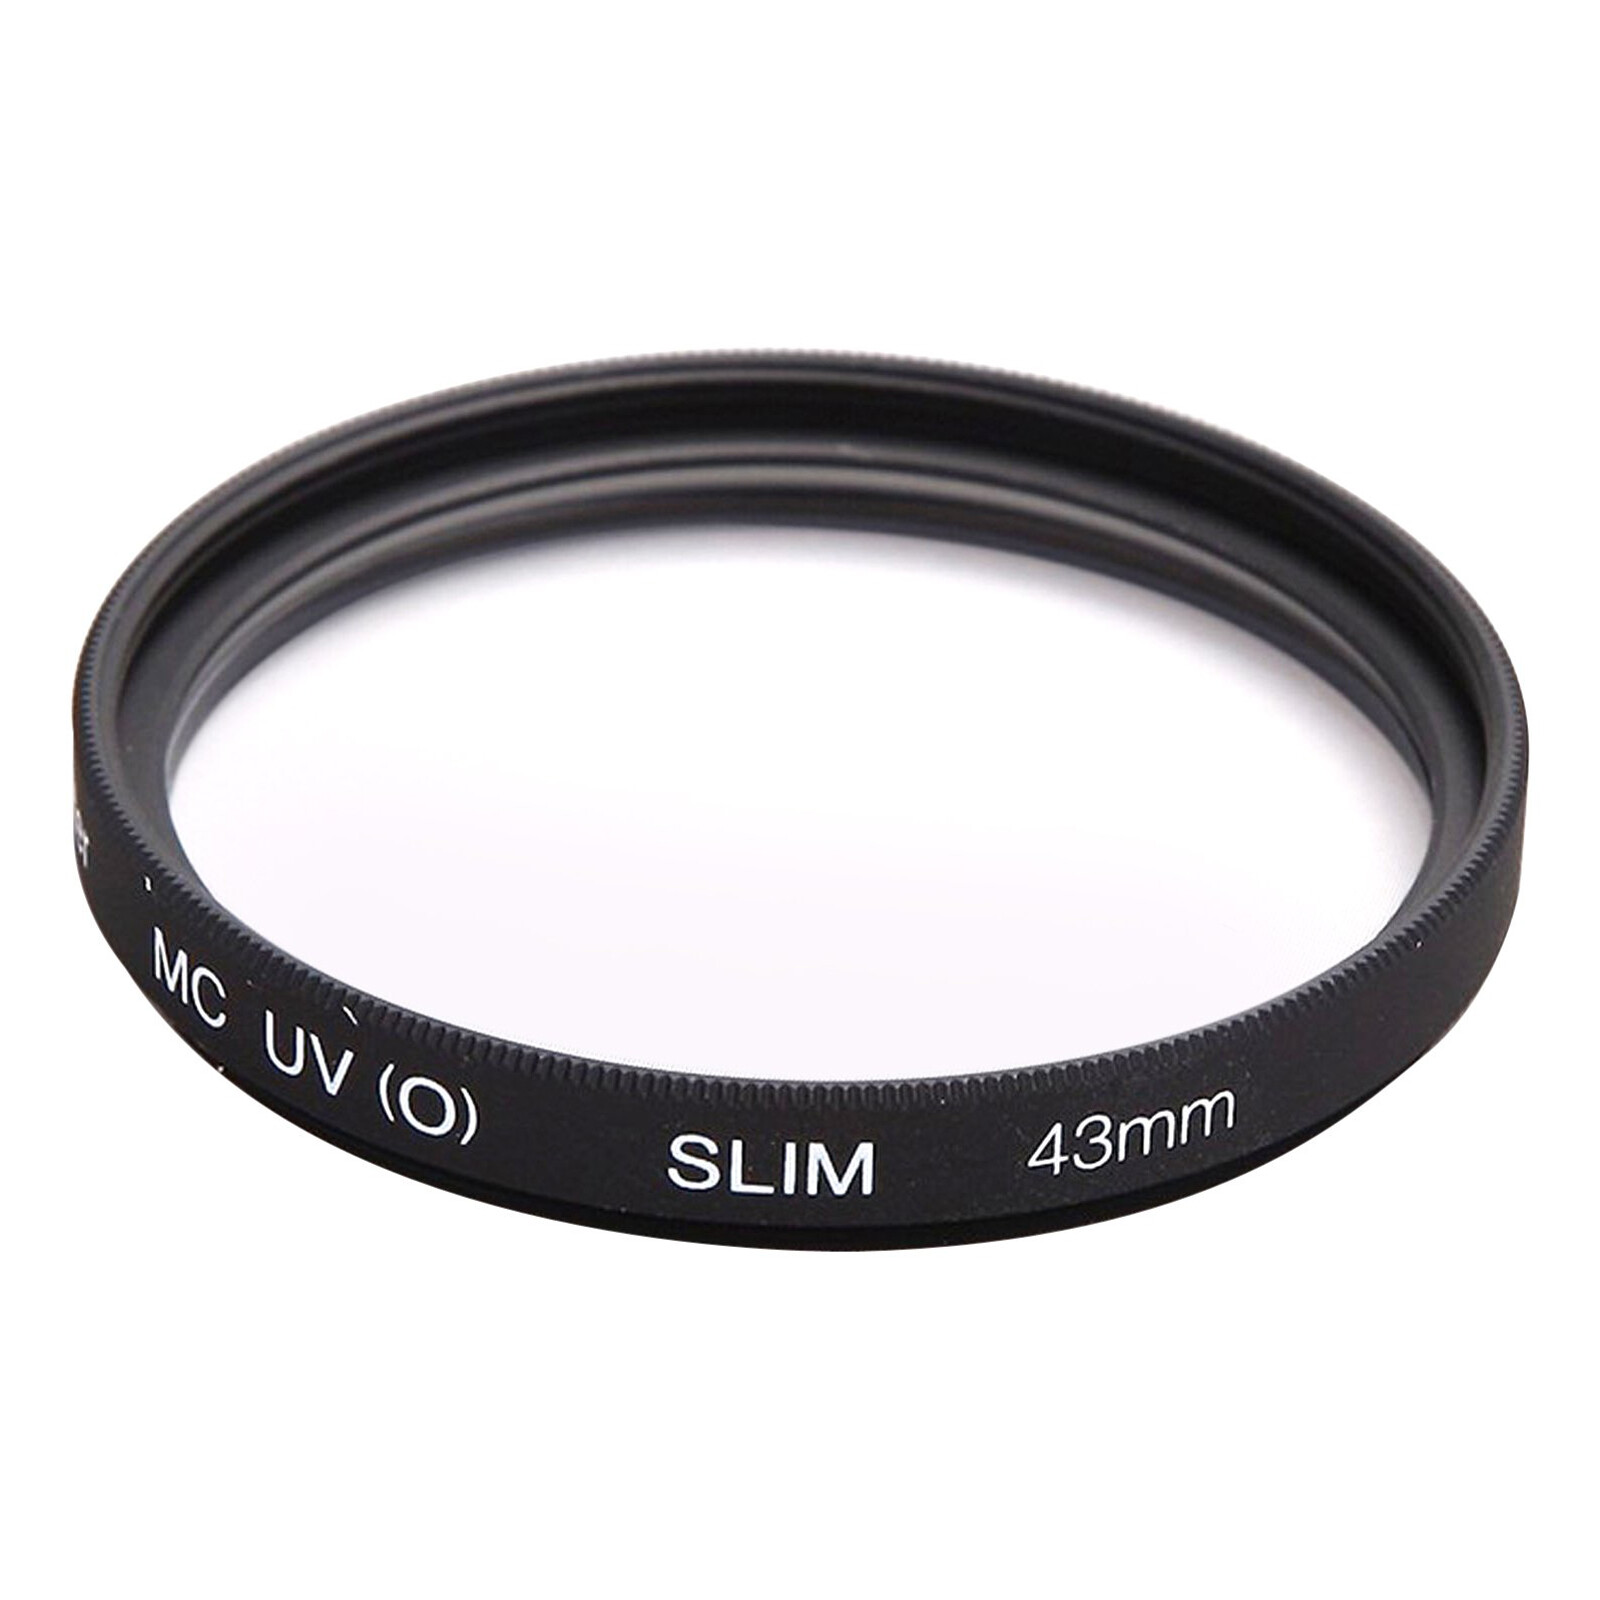 LAOWA 105/2,0 STF Pentax + UV Filter